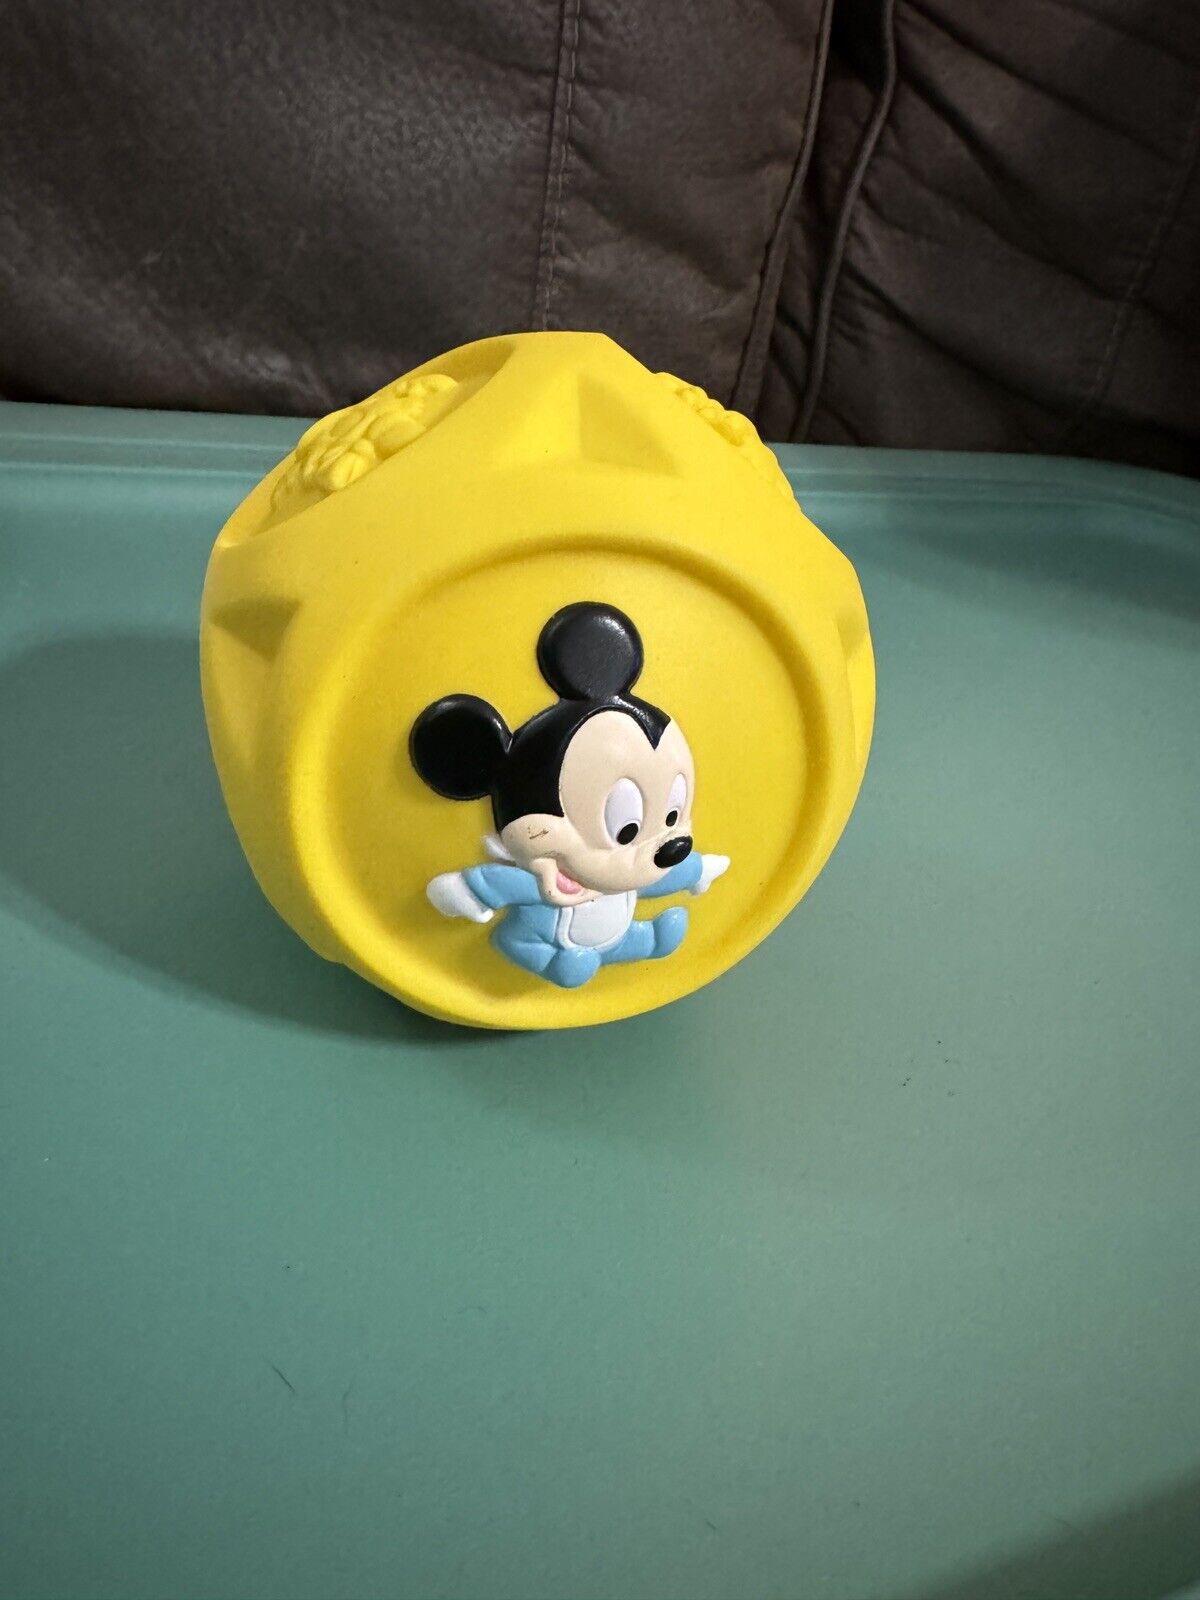 Vtg Disney Yellow Babies Arco Mickey & Friends Round Ball Squeak Toy Rubber 